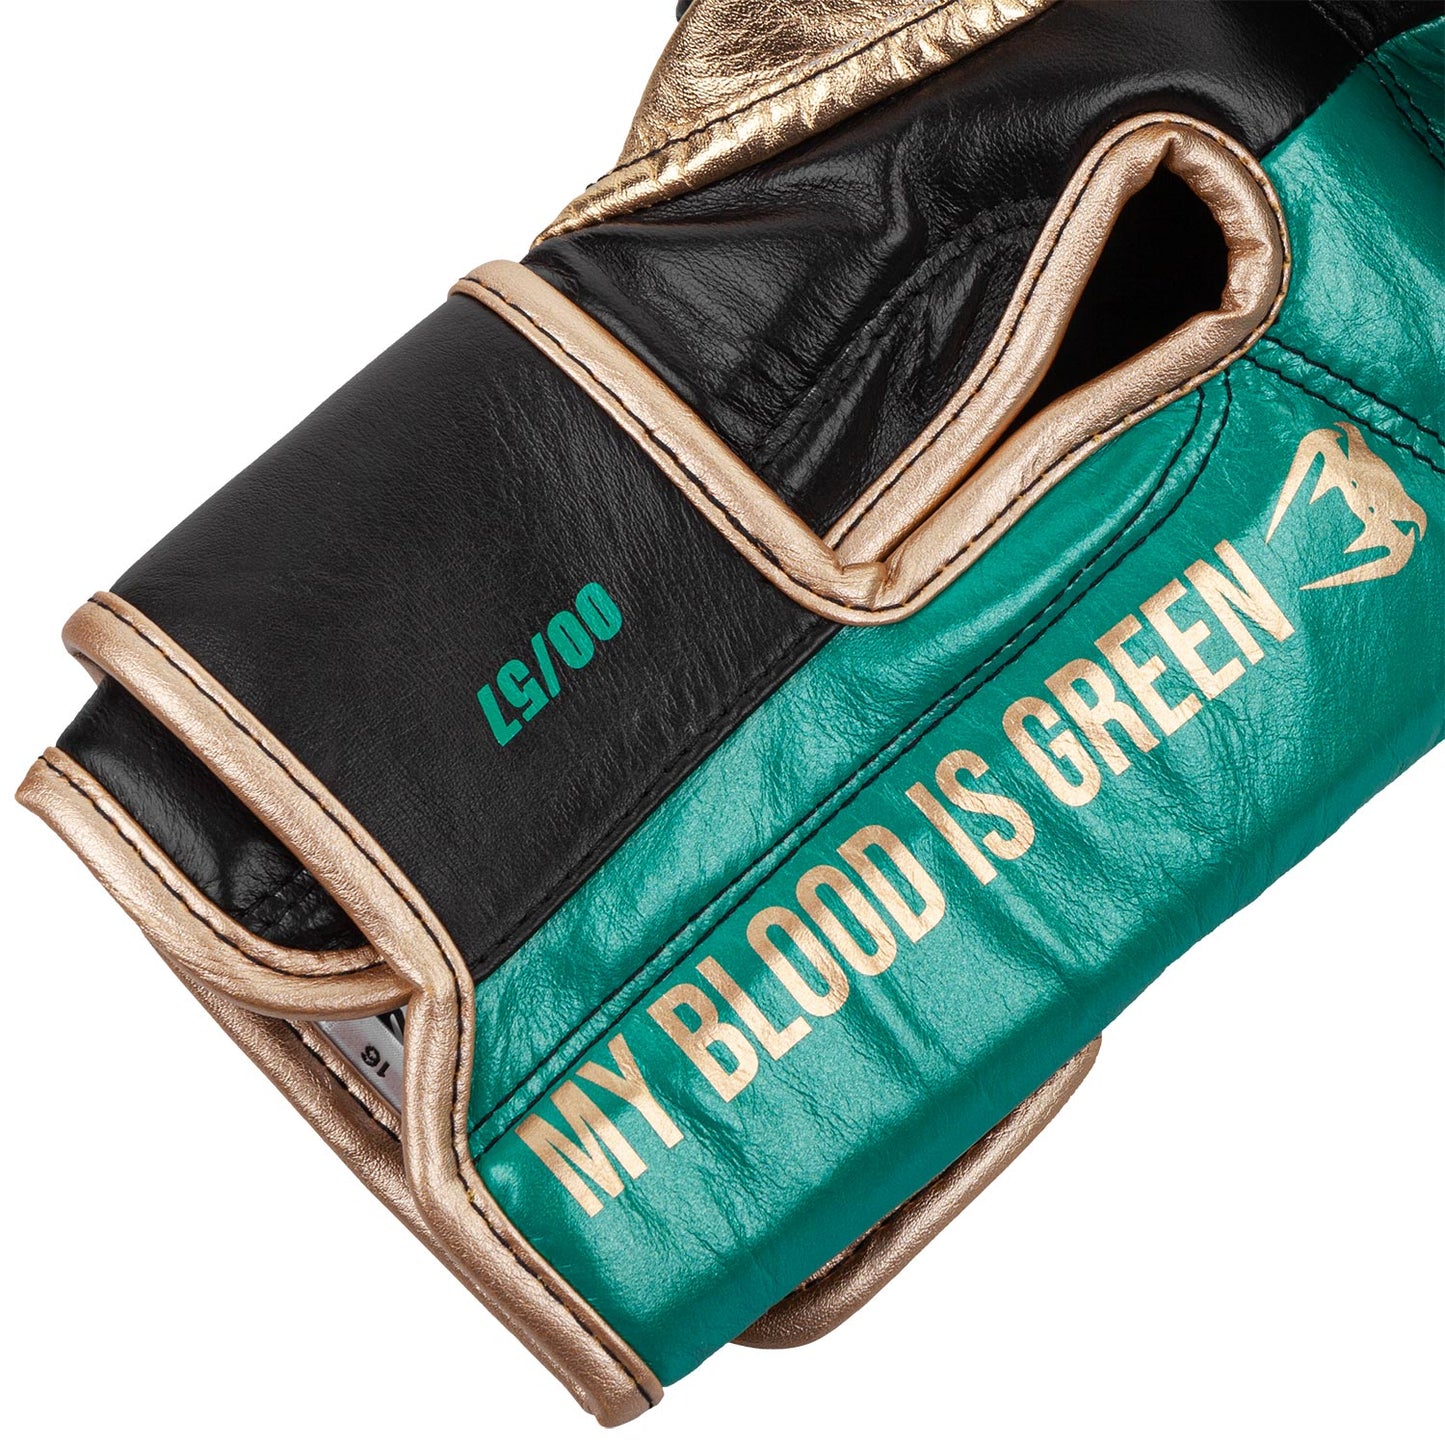 Venum Giant 2.0 Pro bokshandschoenen - WBC Limited Edition - Velcro